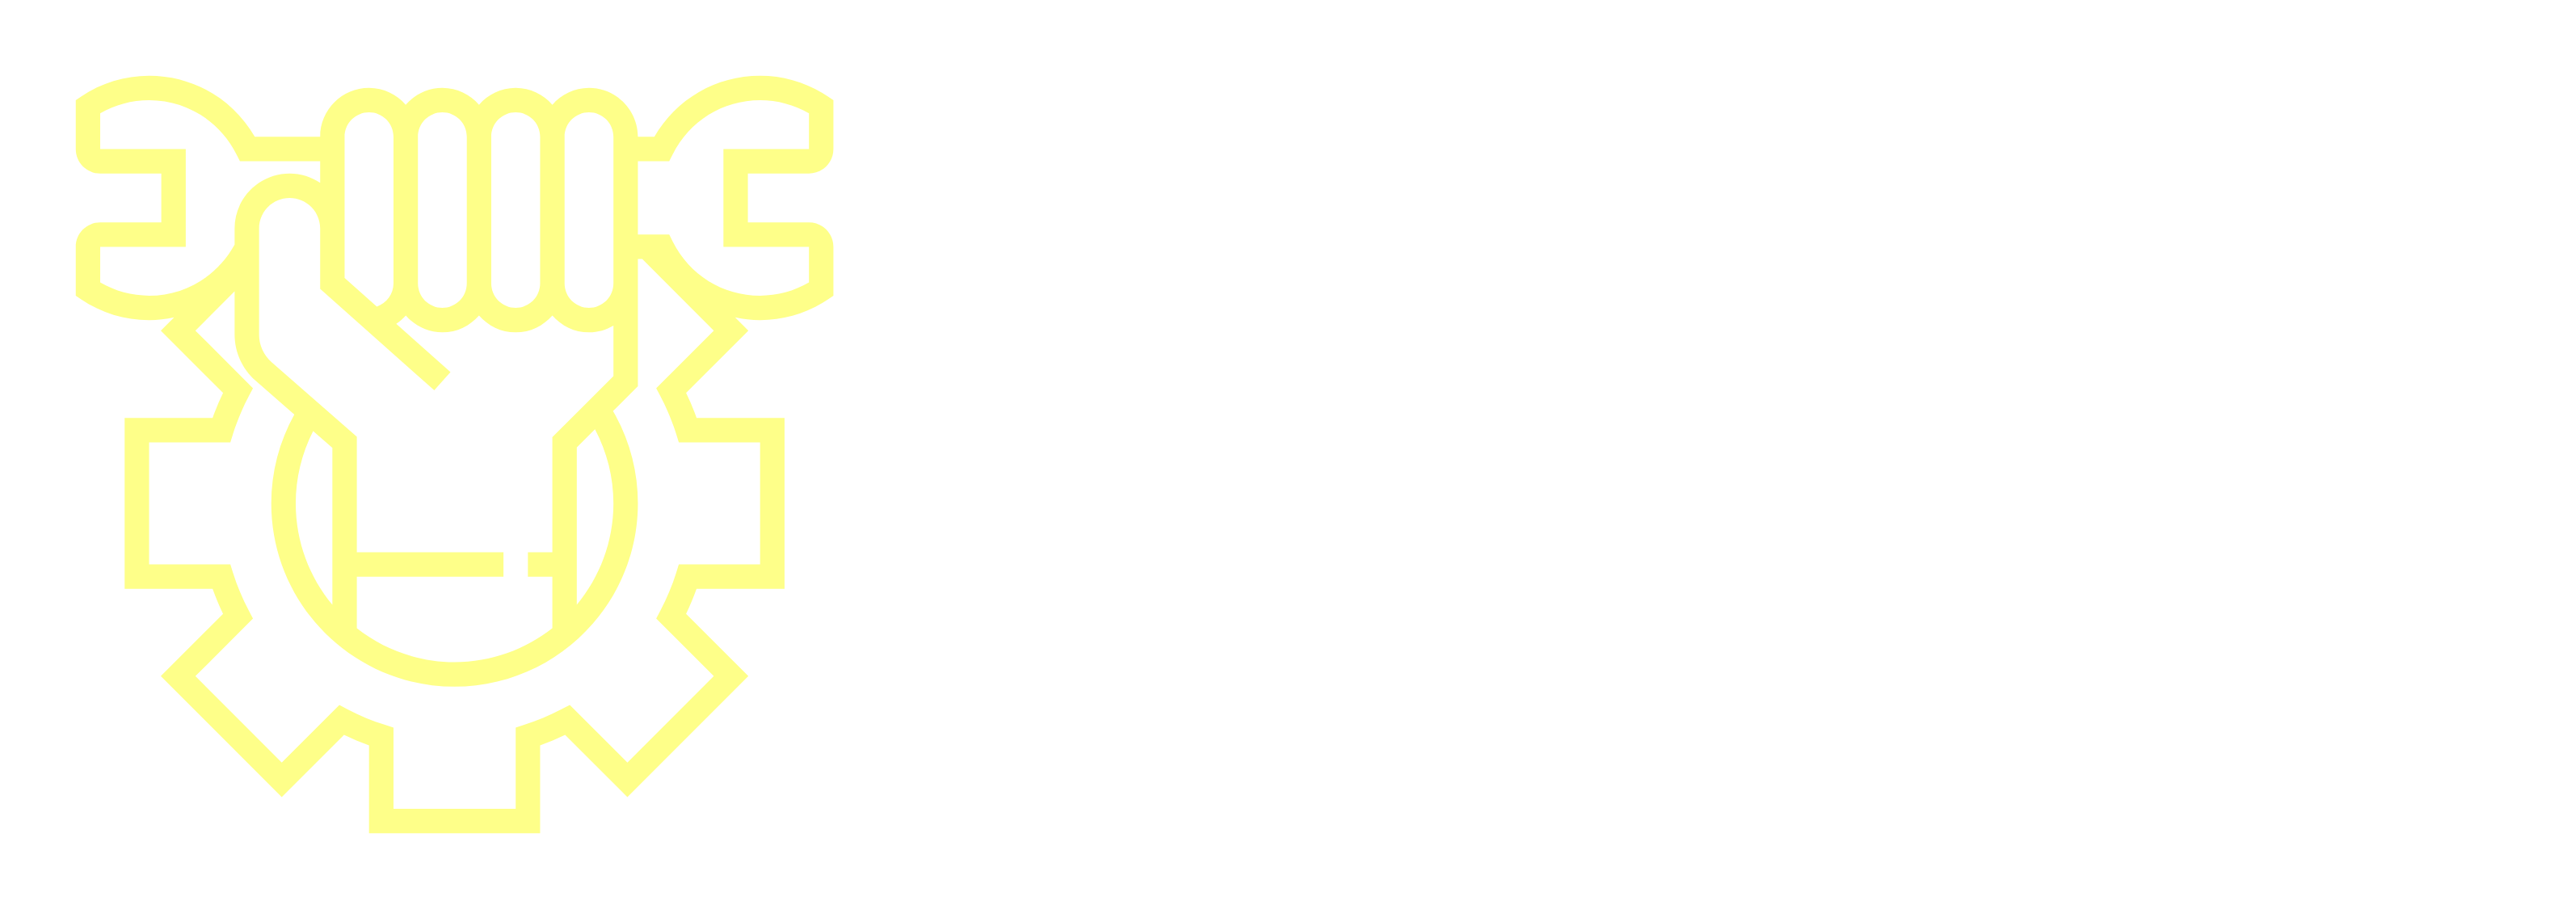 Automotive Repair Answers